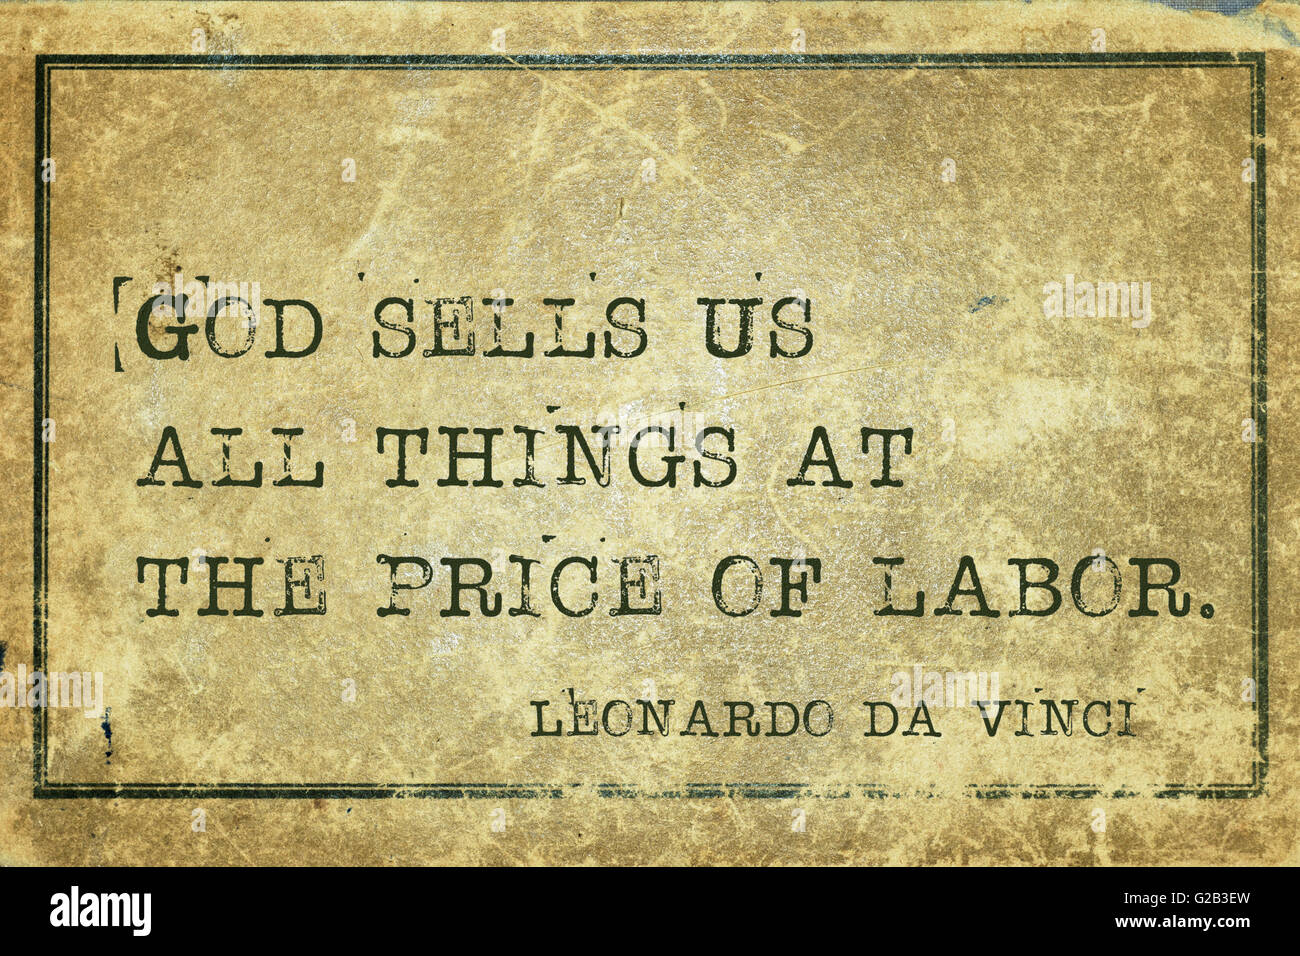 God sells us all things at the price of labor - ancient Italian artist Leonardo da Vinci quote printed on grunge vintage cardboa Stock Photo